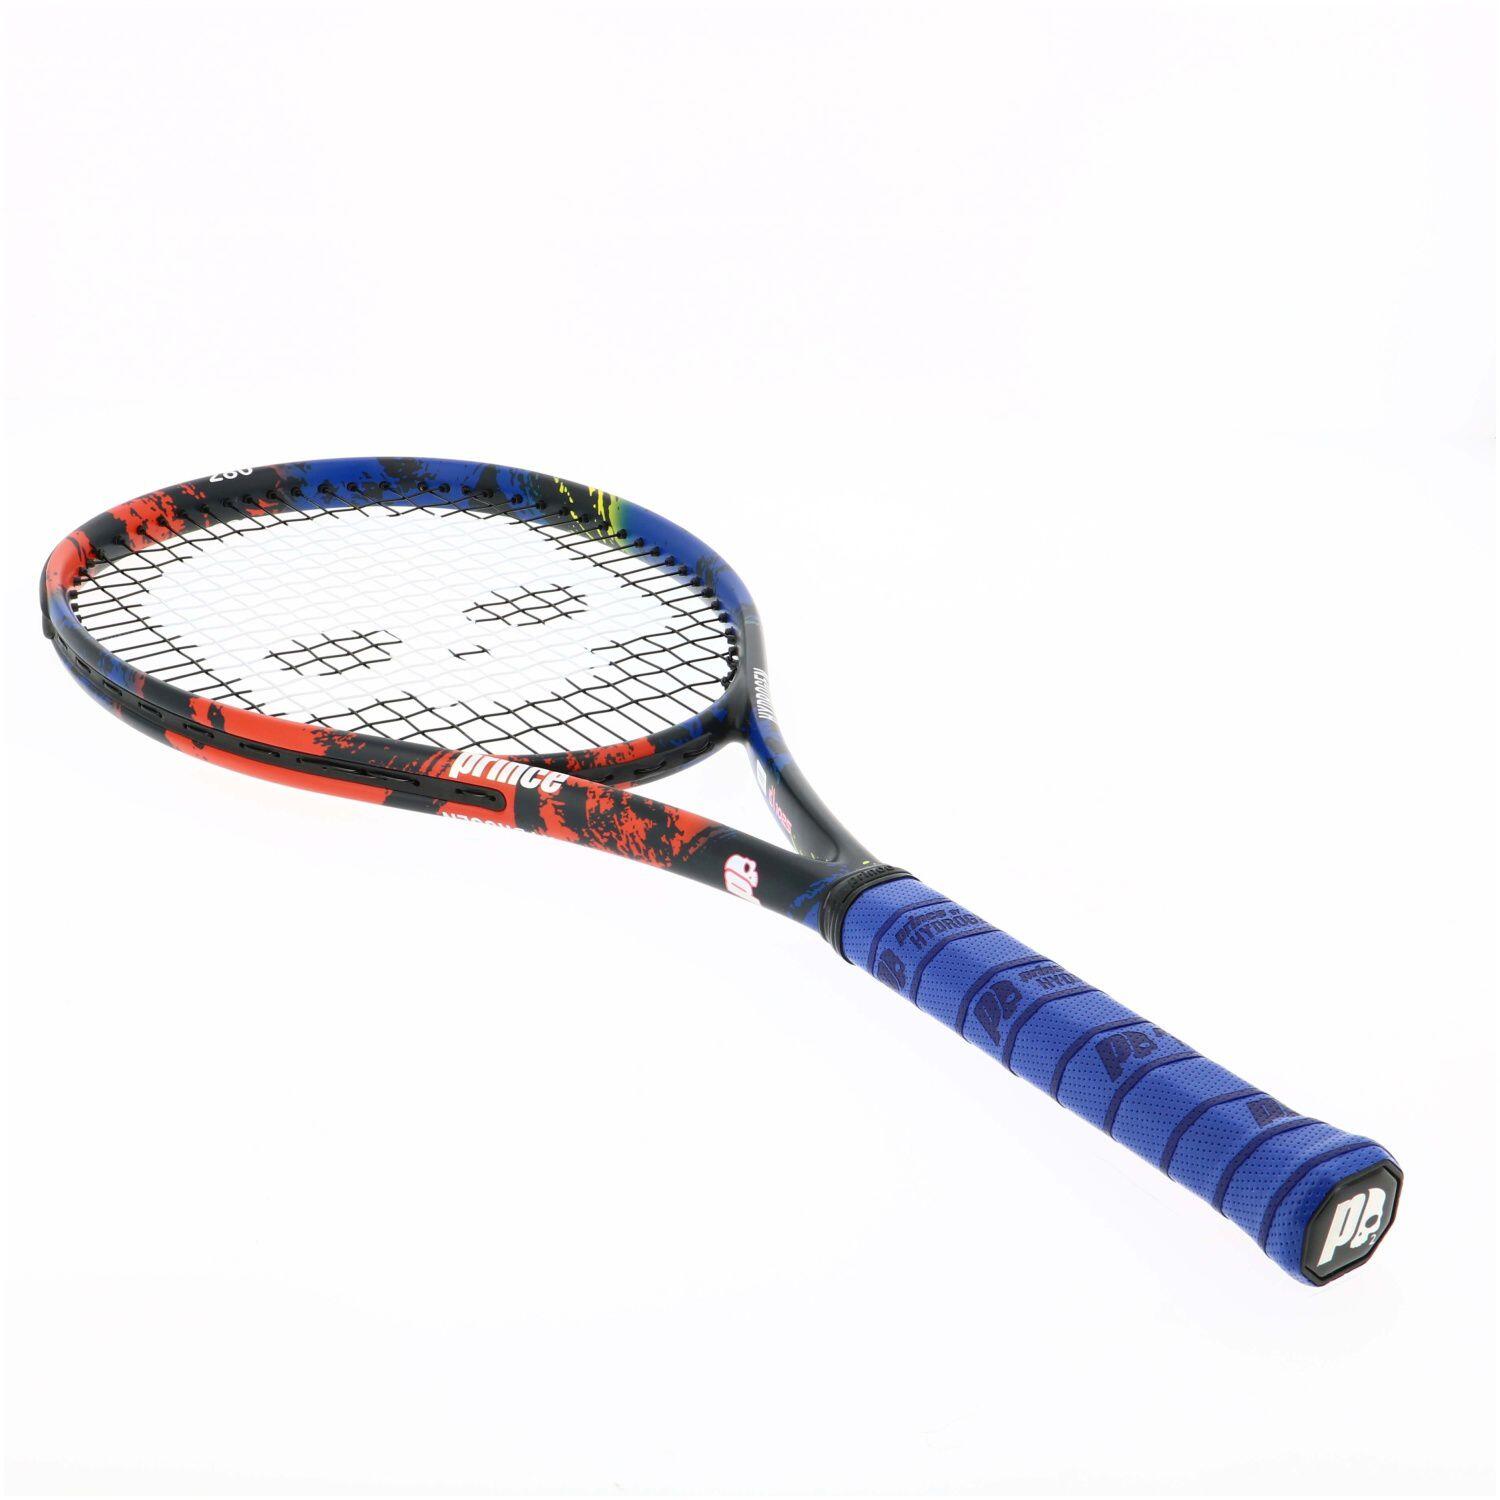 Prince Beast Hydrogen Random 280g Tennis Racket - Limited Edition 4/5